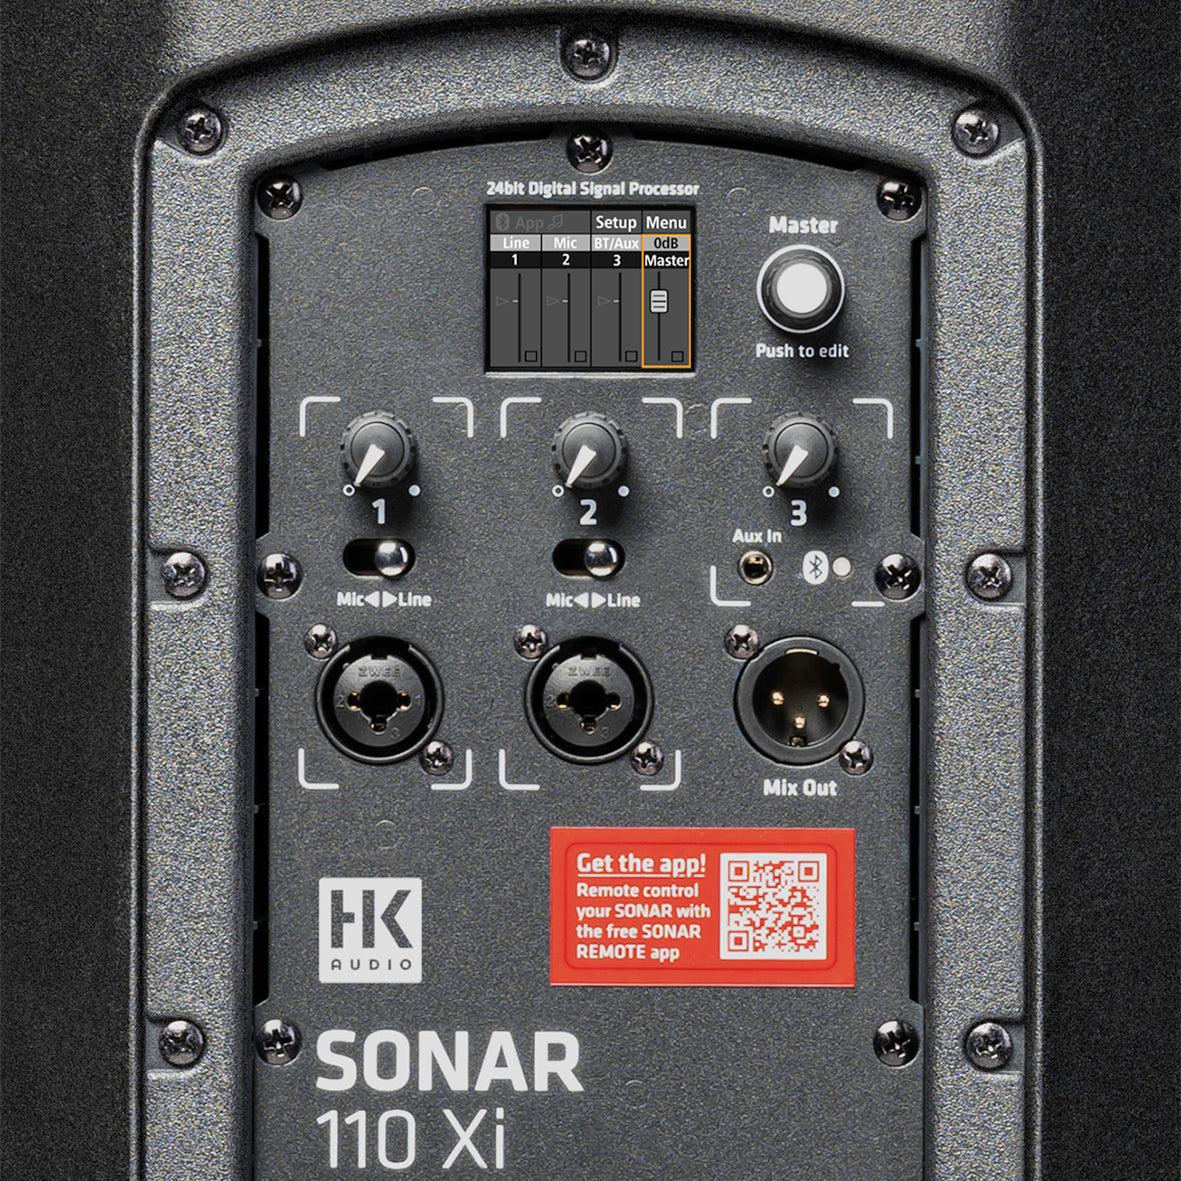 HK Audio Sonar 110 XL 10" 800W Powerede Speaker